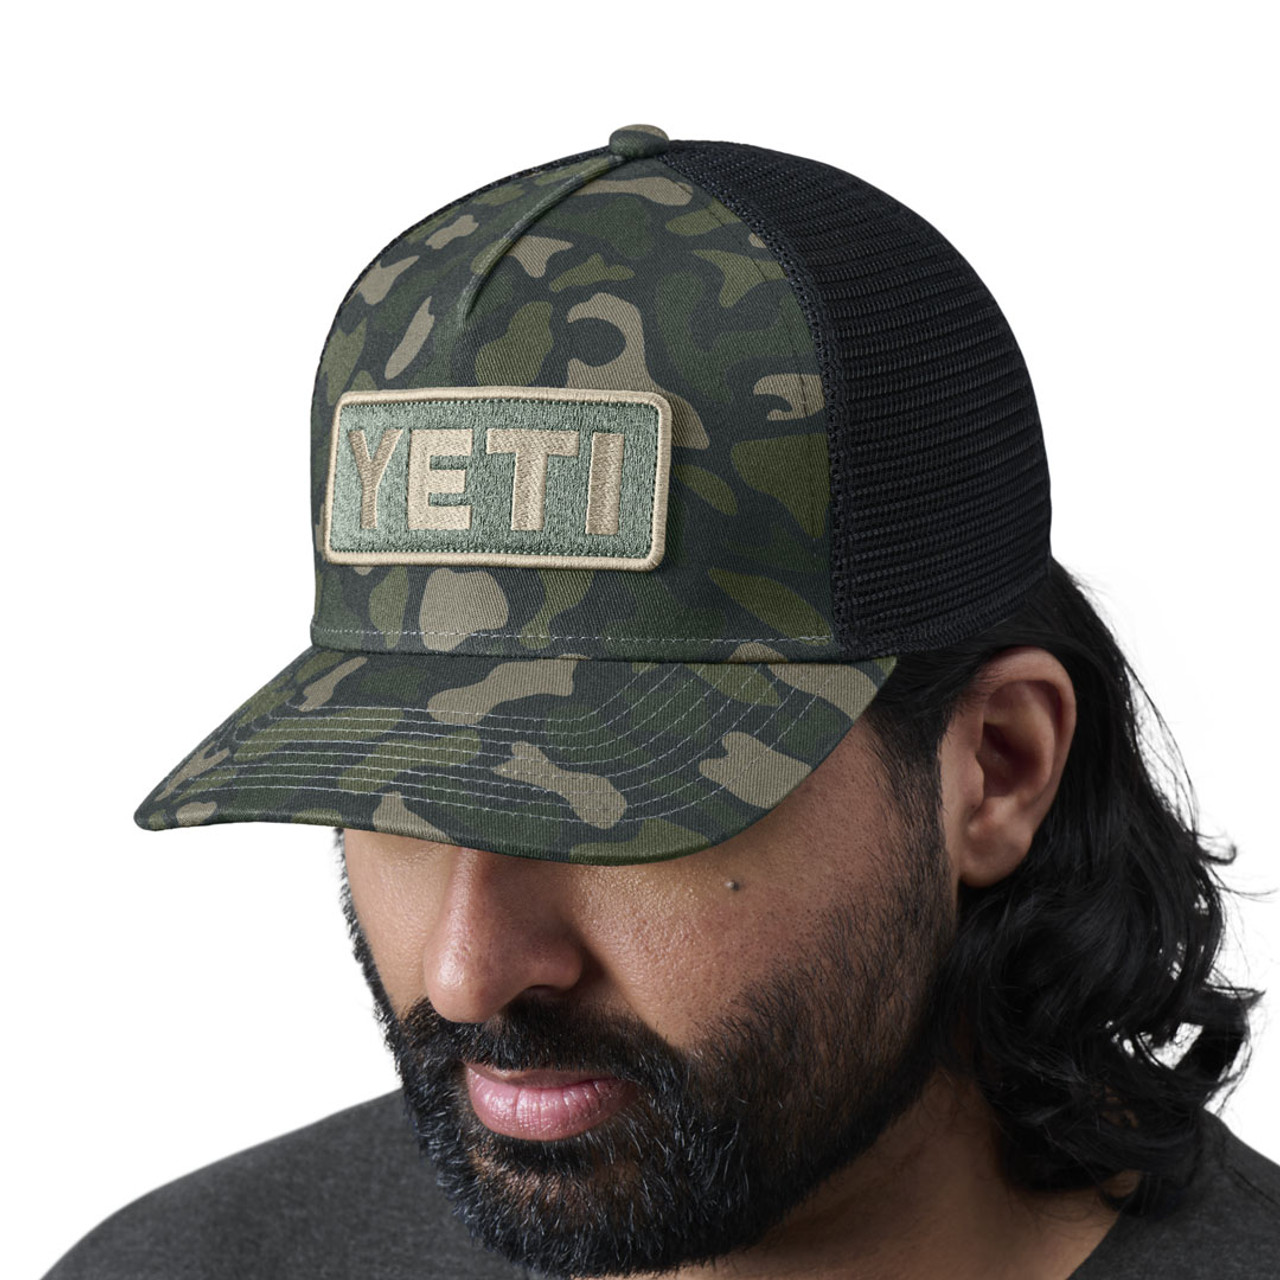 YETI Built For The Wild Trucker Hat $ 25